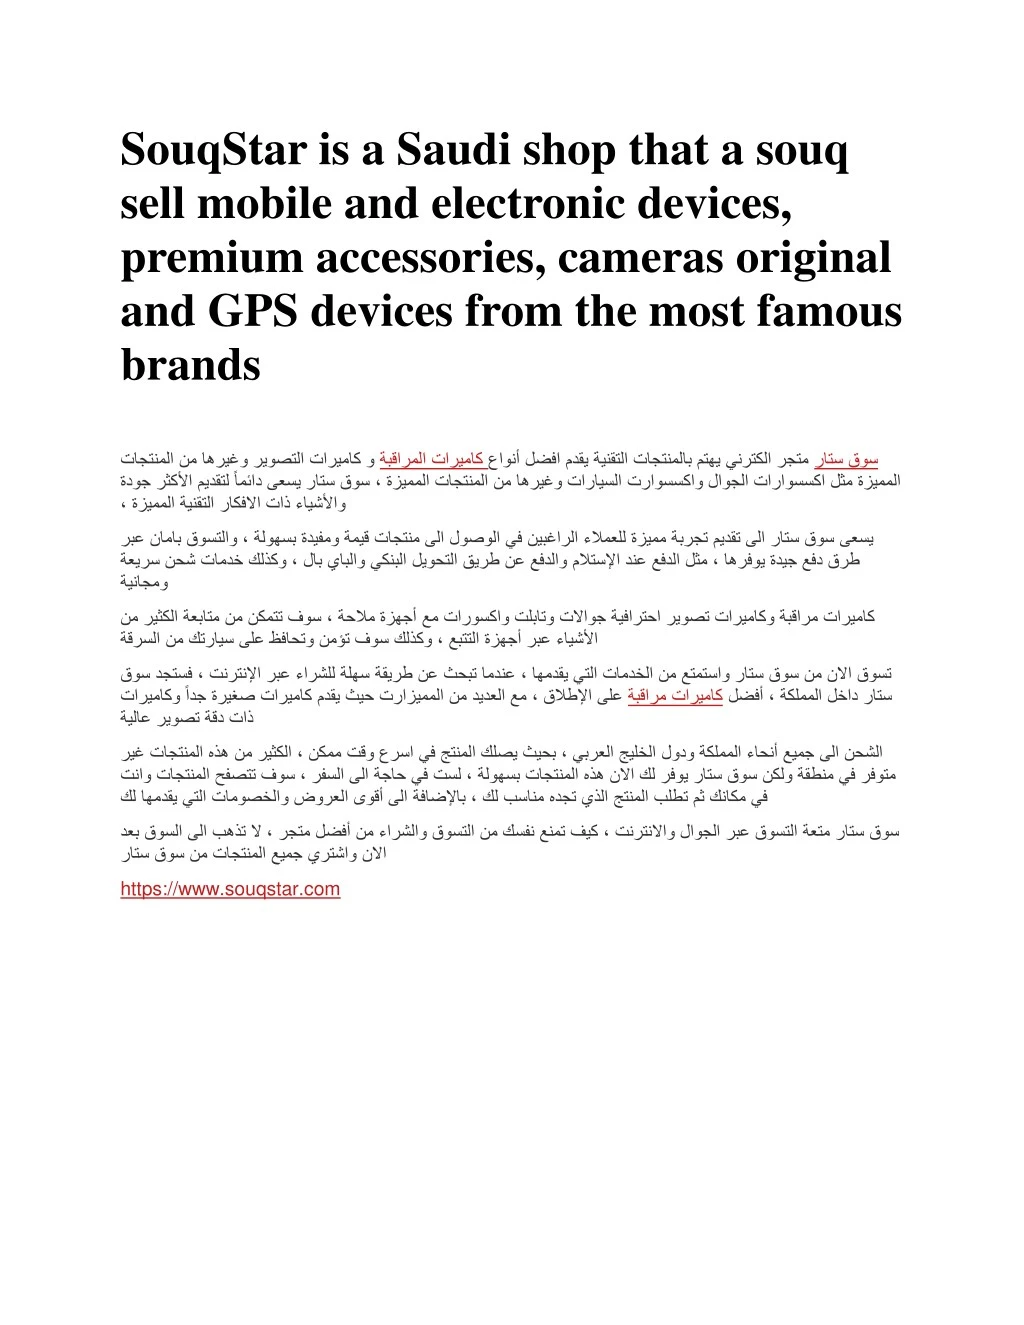 souqstar is a saudi shop that a souq sell mobile